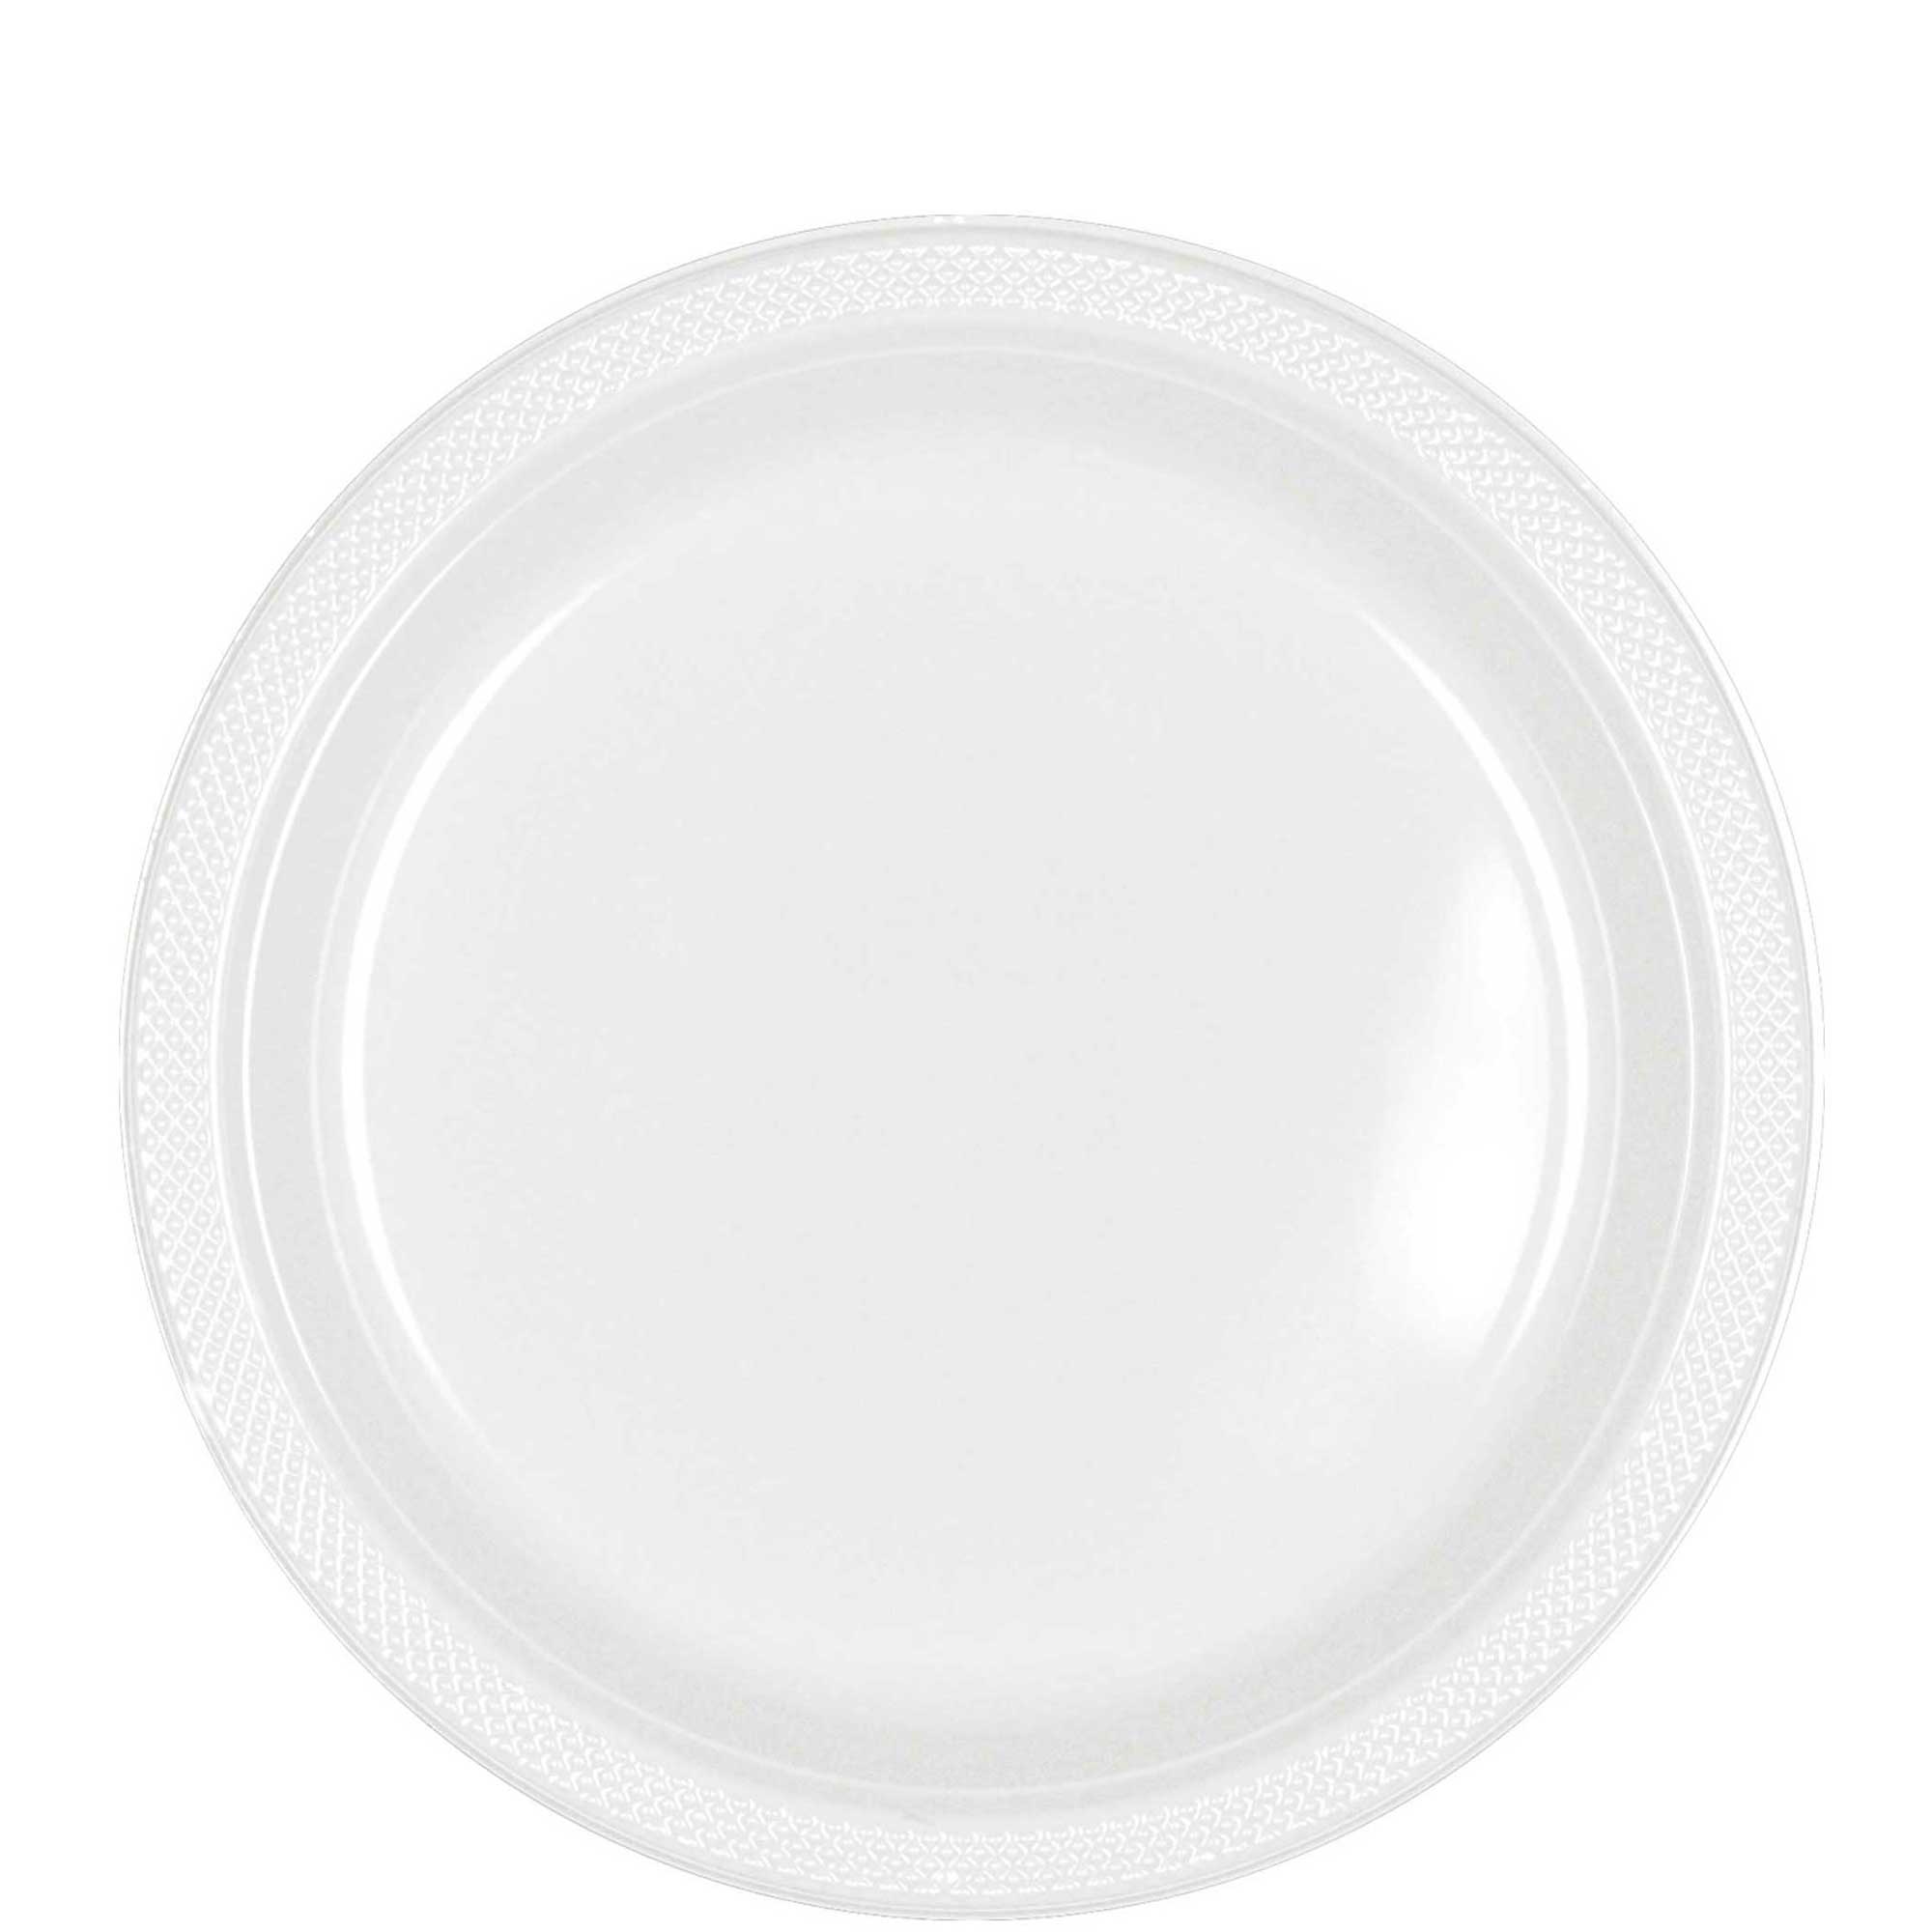 43031.08 White Plastic Plates 9in 20ct 01 ?v=1617675300